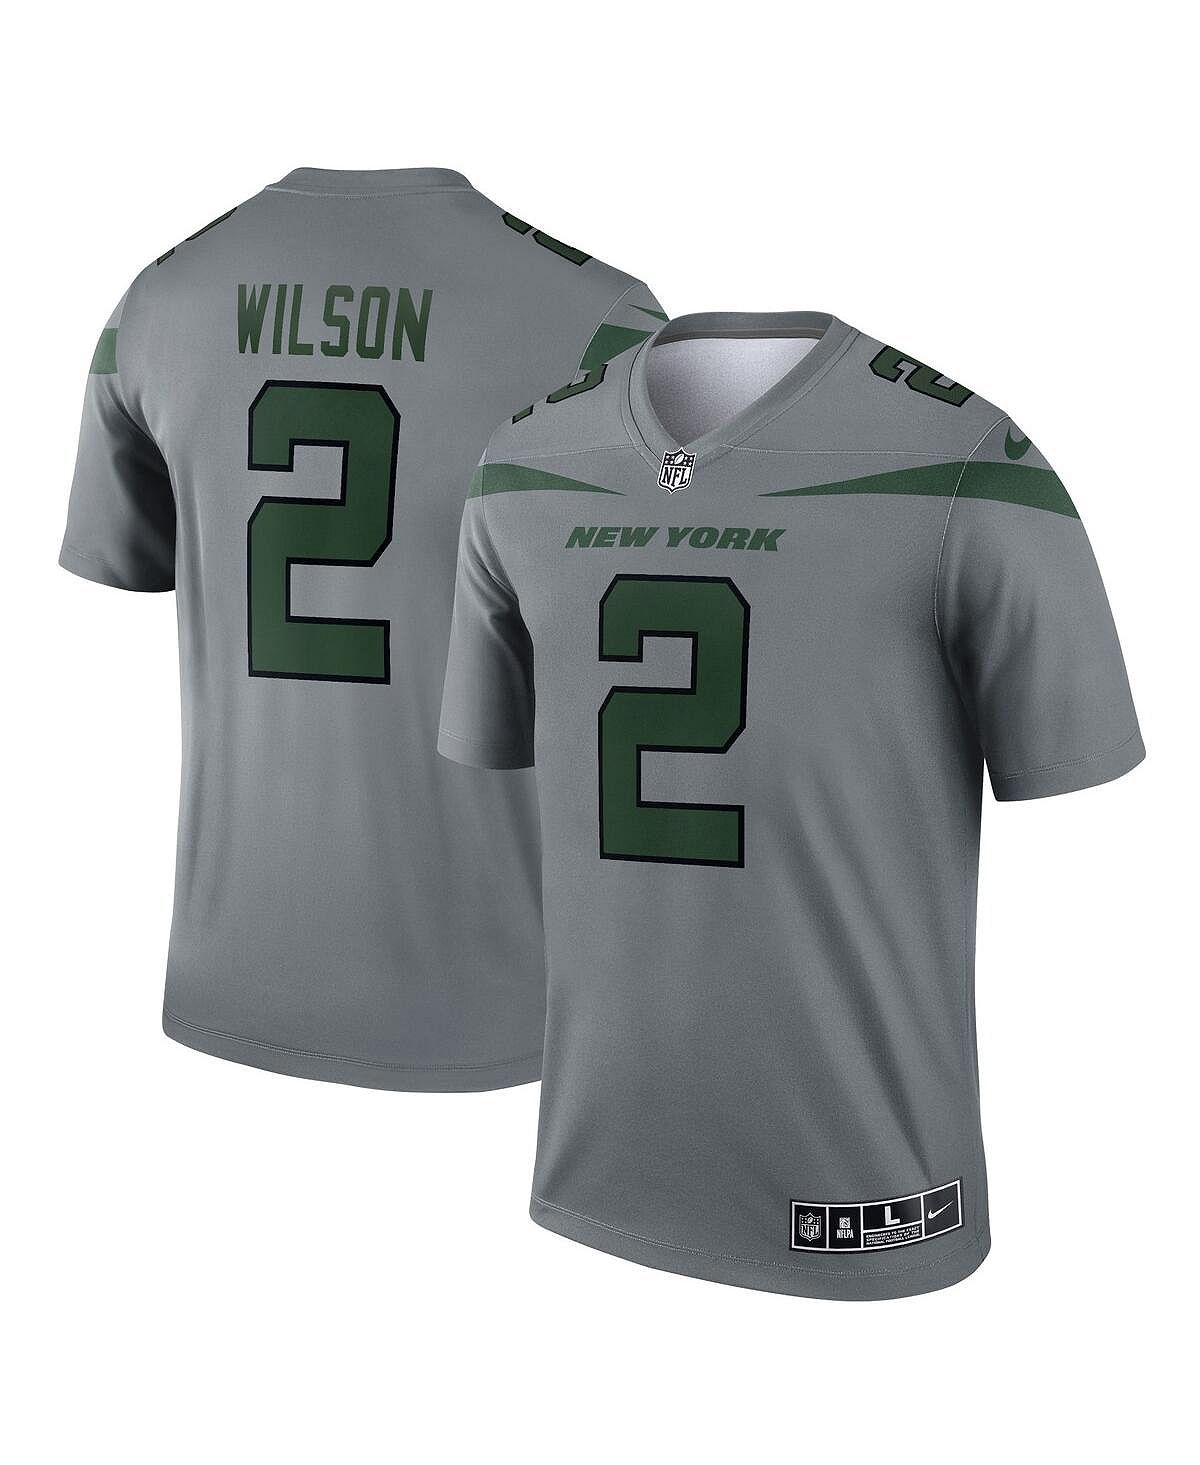 Мужская футболка zach wilson grey new york jets с перевернутой легендой Nike, серый